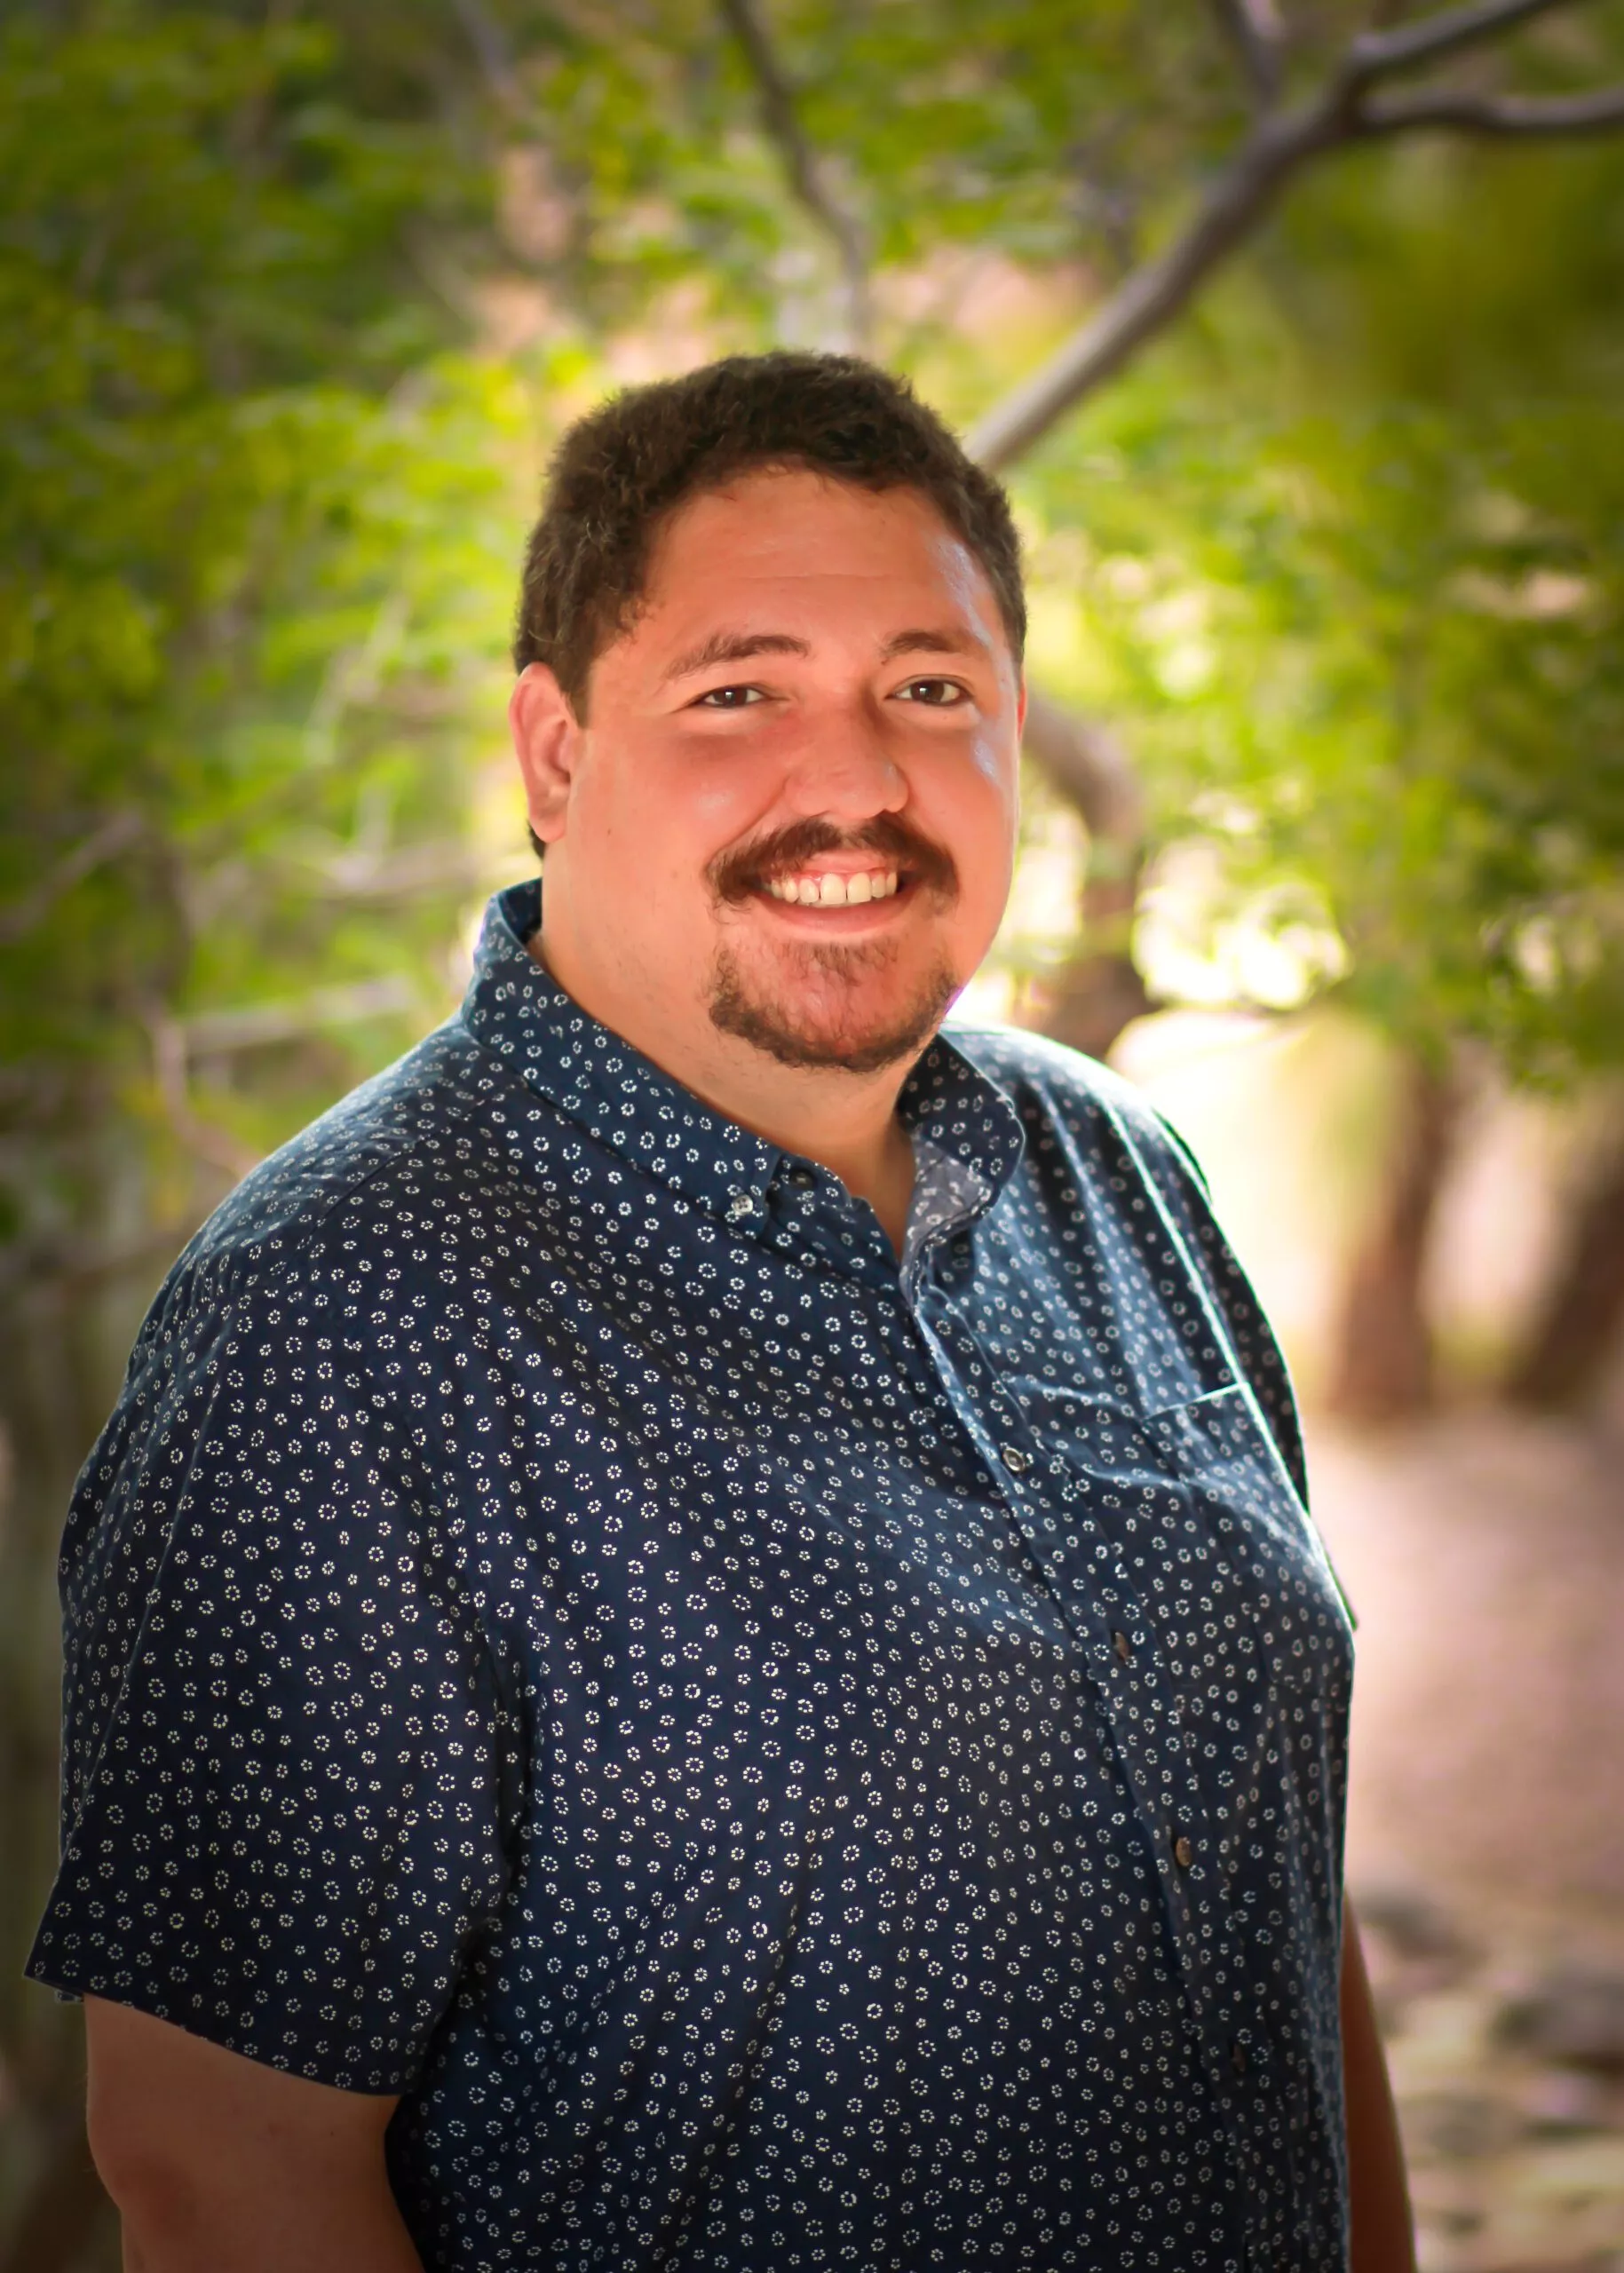 Ryan Porter - Milieu Manager at Cottonwood Tucson